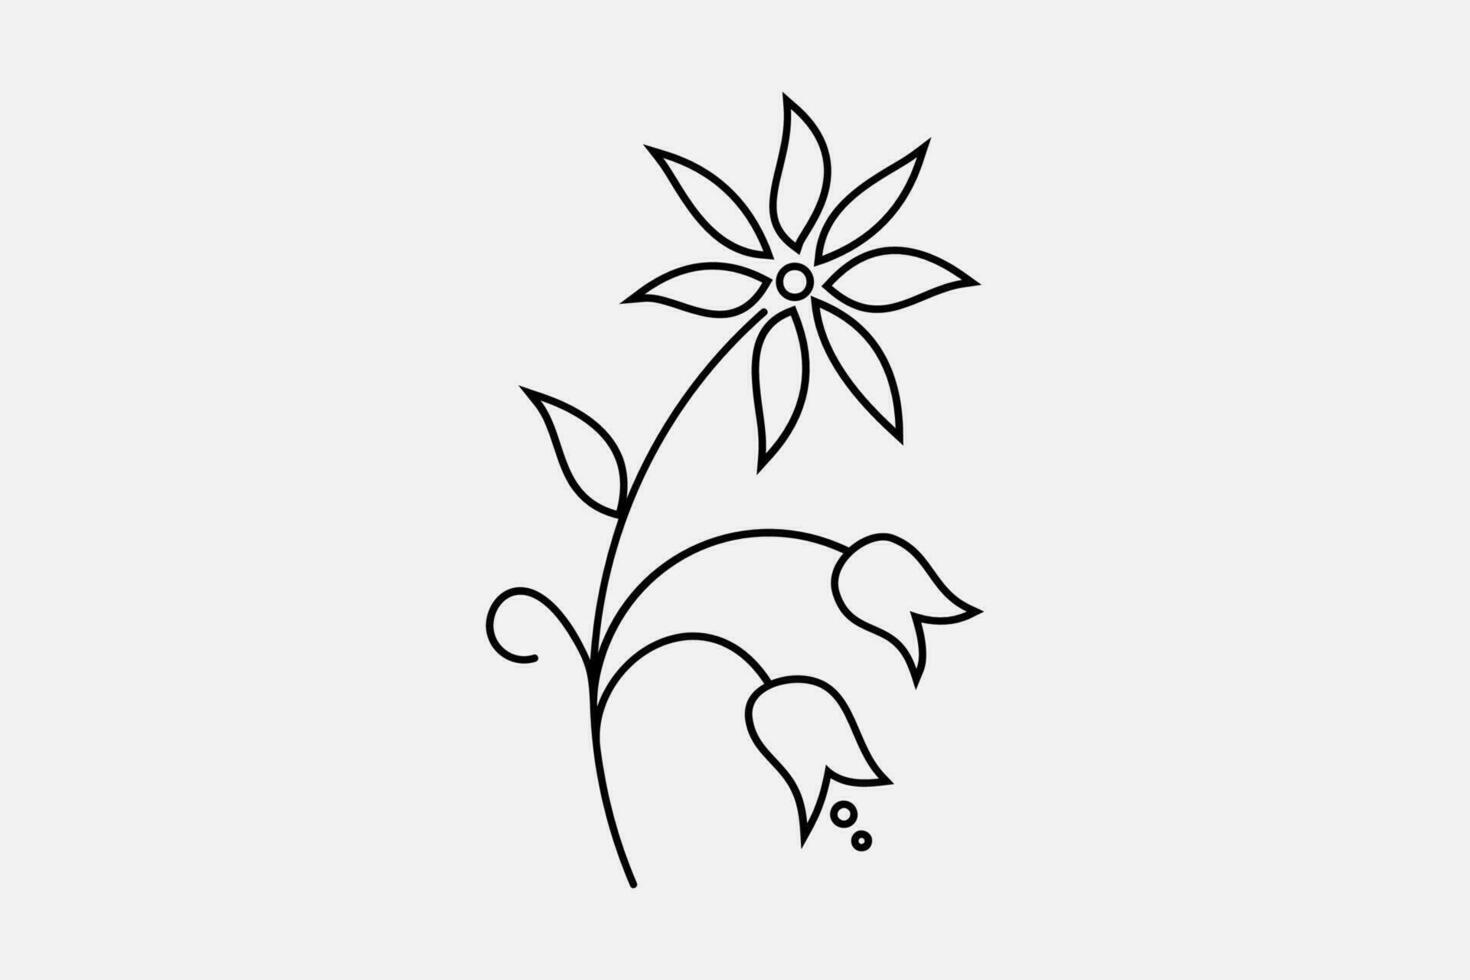 Simple Black Outline Hand Drawn Flower Design Elements vector